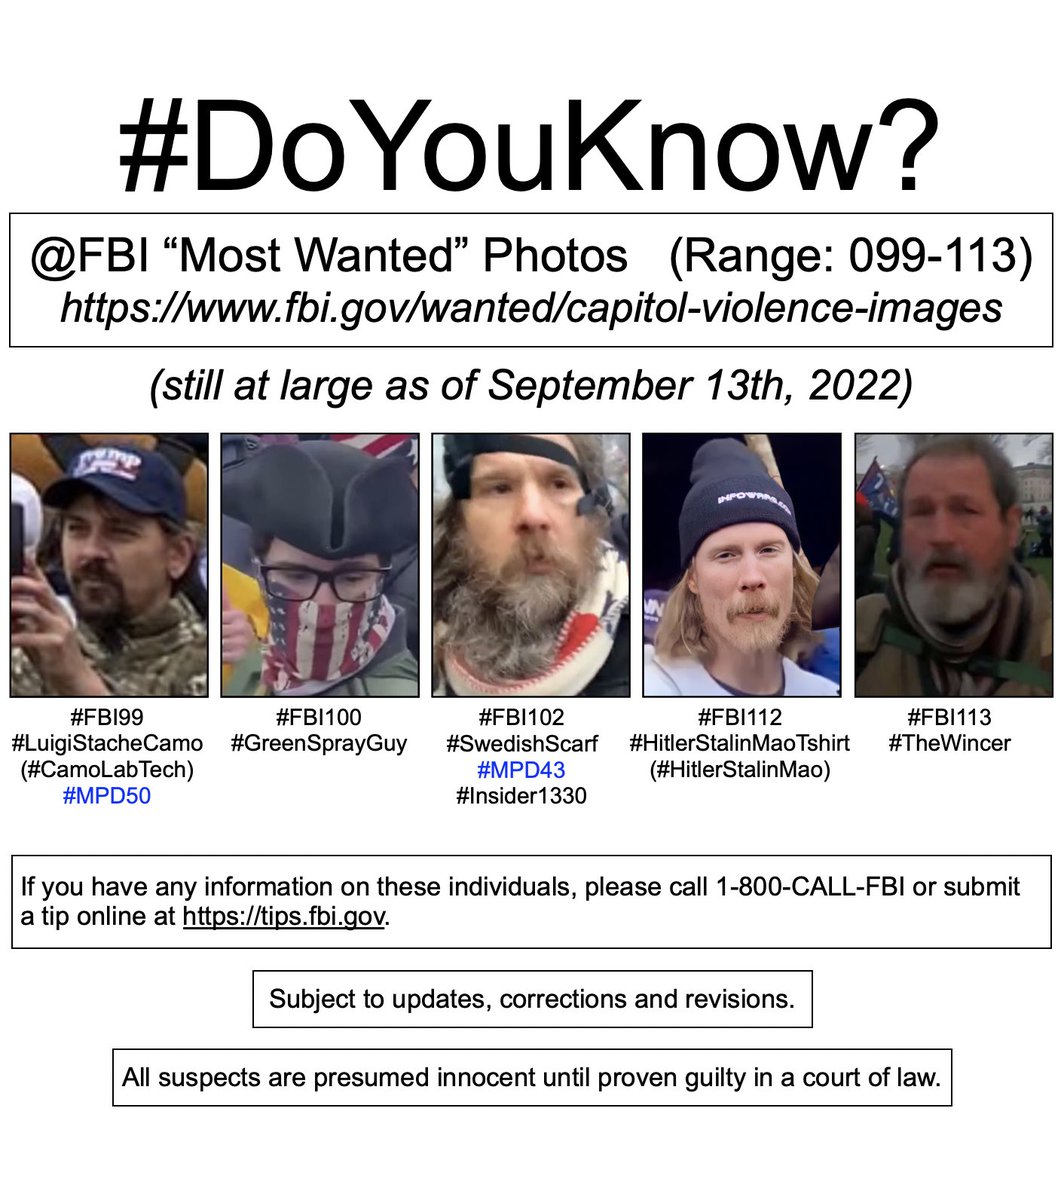 #SeditionHunters
🧵
8/

fbi.gov/wanted/capitol…

Range: 099-113

#FBI99 (#LuigiStacheCamo)(#CamoLabTech)(#MPD50)

#FBI100 (#GreenSprayGuy)

#FBI102 (#SwedishScarf)(#MPD43)(#Insider1330)

#FBI112 (#HitlerStalinMaoTshirt)(#HitlerStalinMao)

#FBI113 (#TheWincer)

#SeditionInsiders